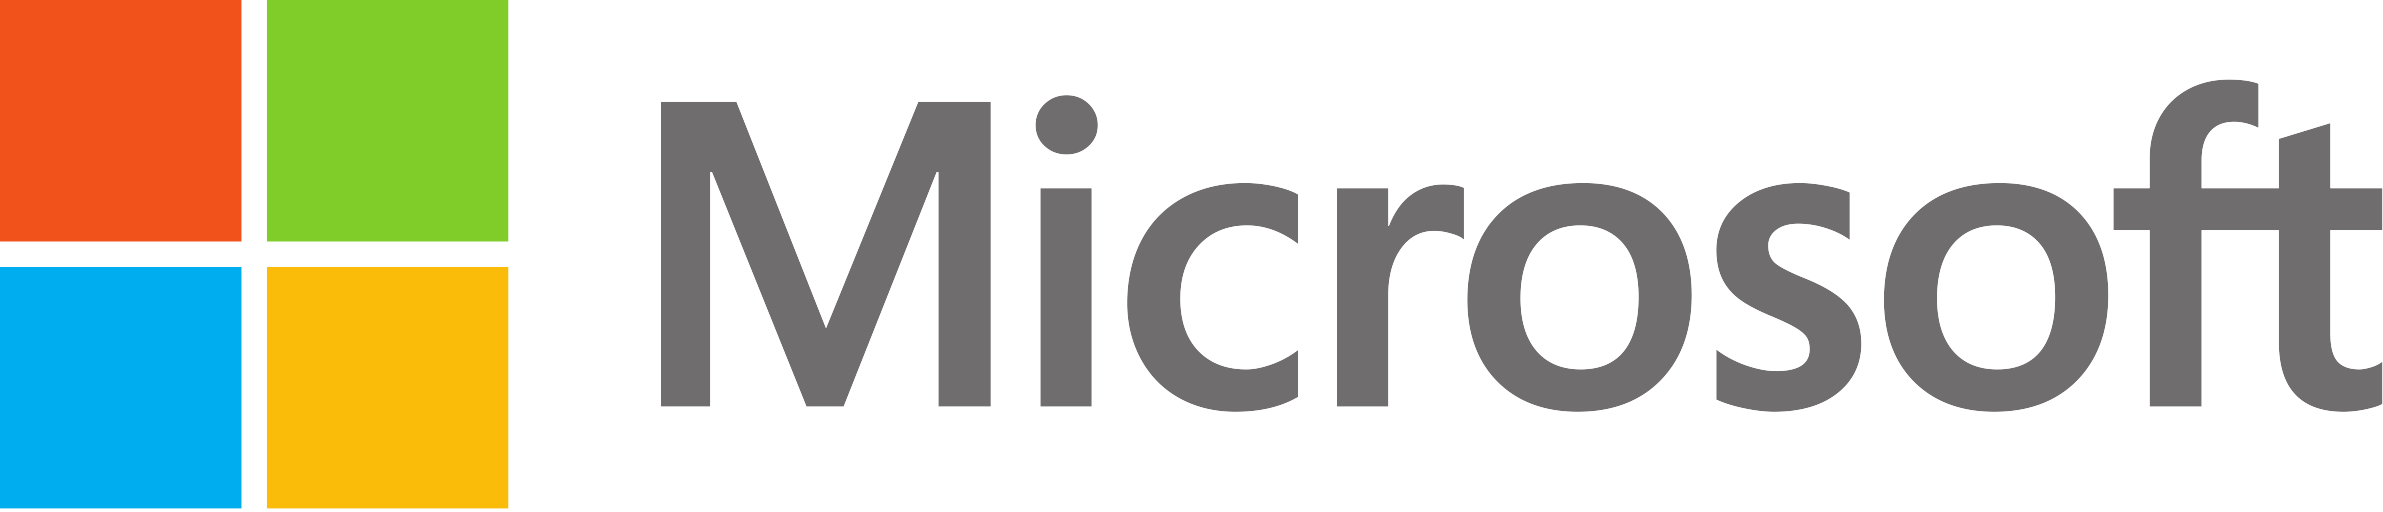 college of engineering Microsoft logo